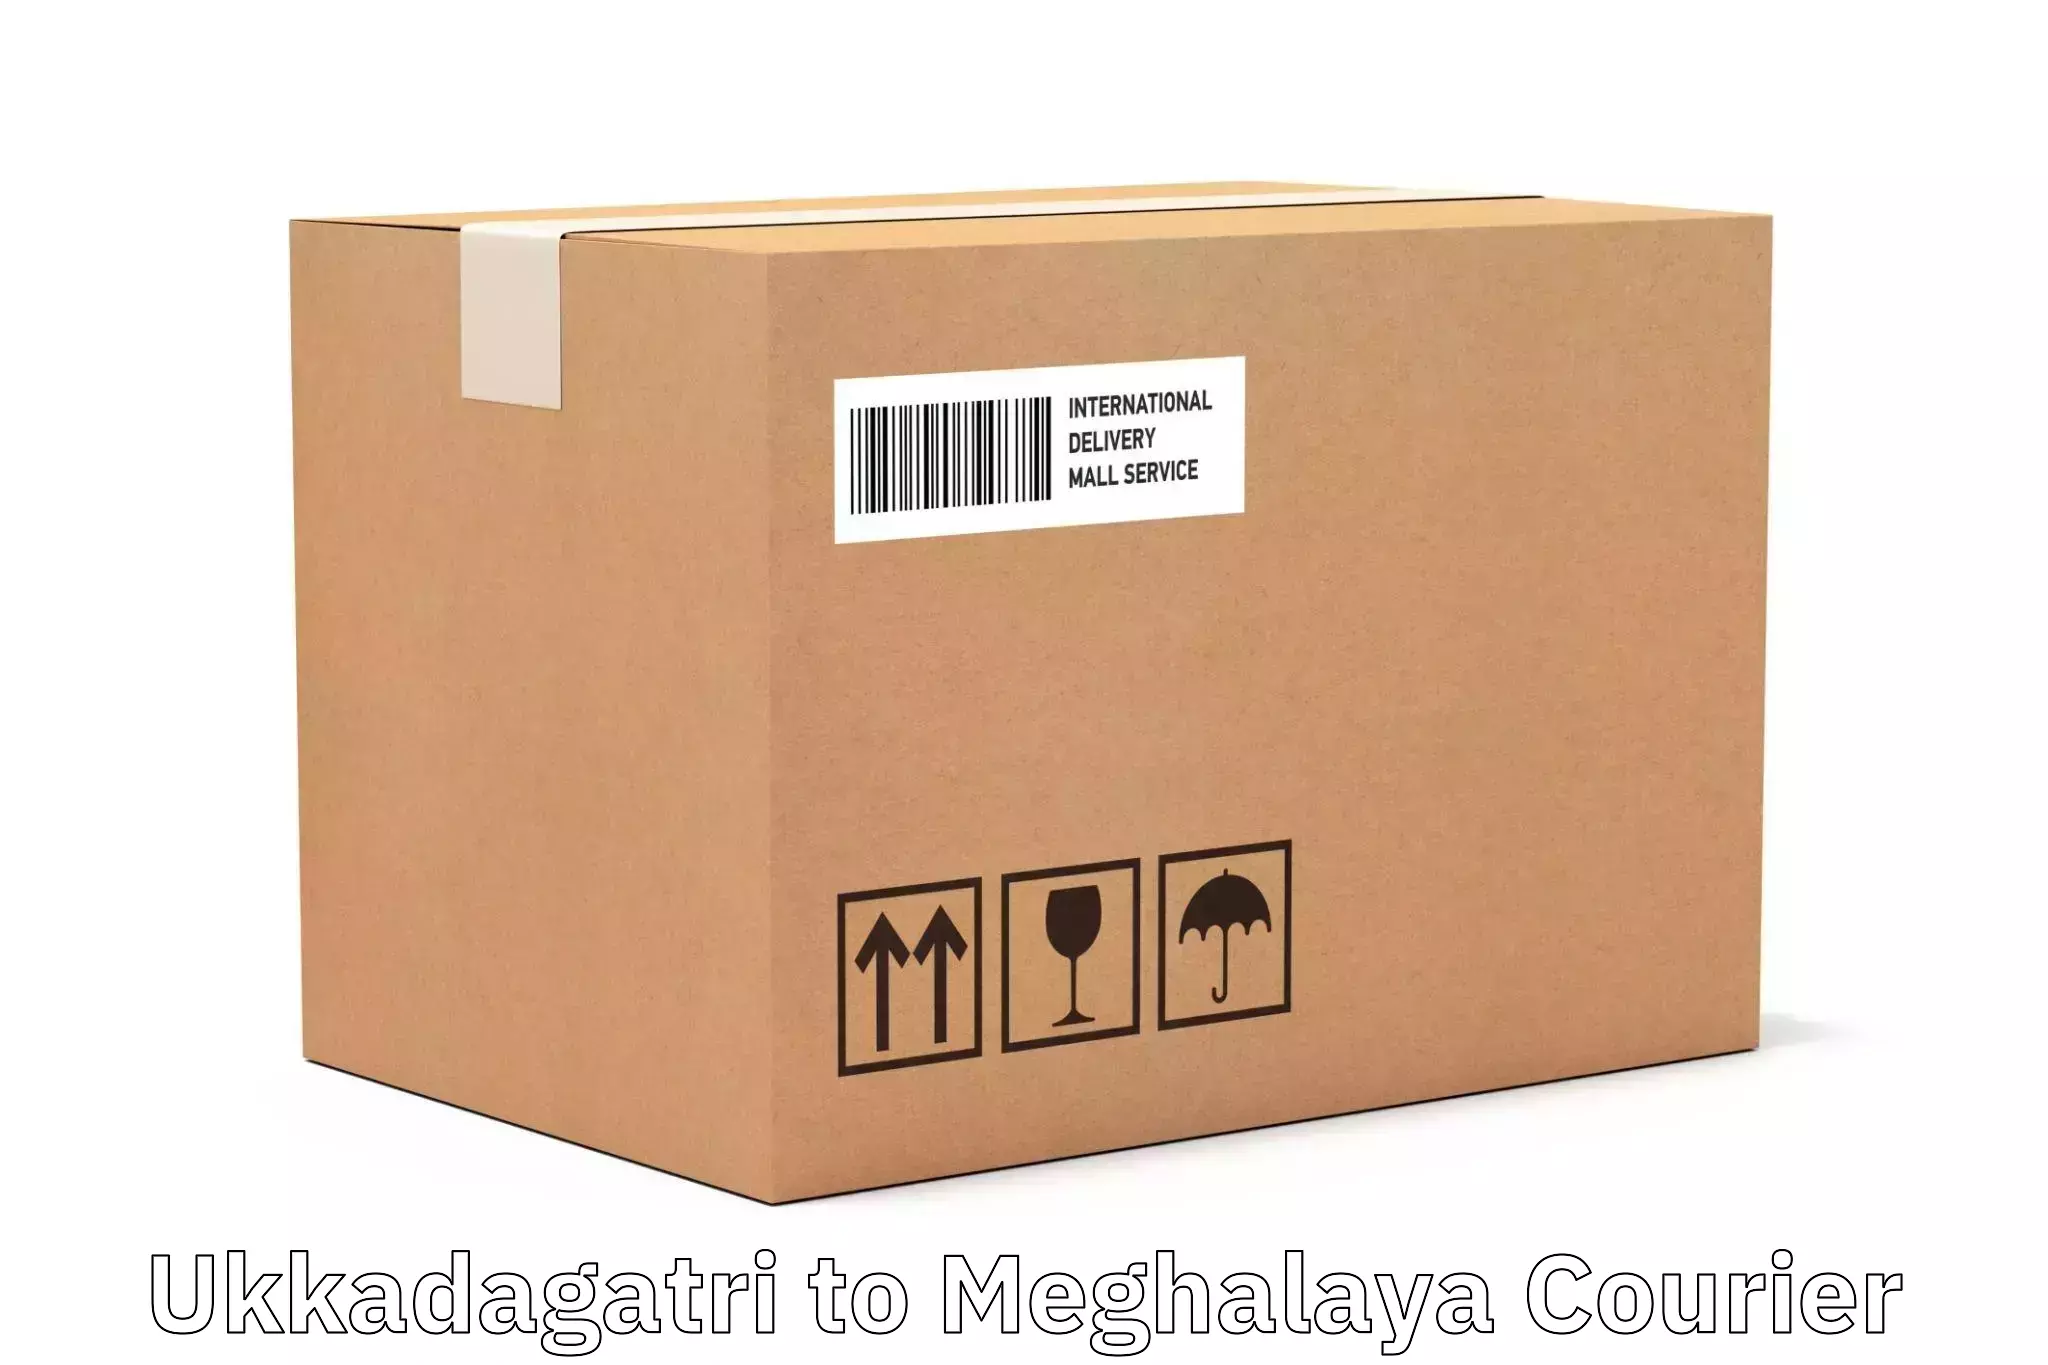 Cargo delivery service in Ukkadagatri to Meghalaya